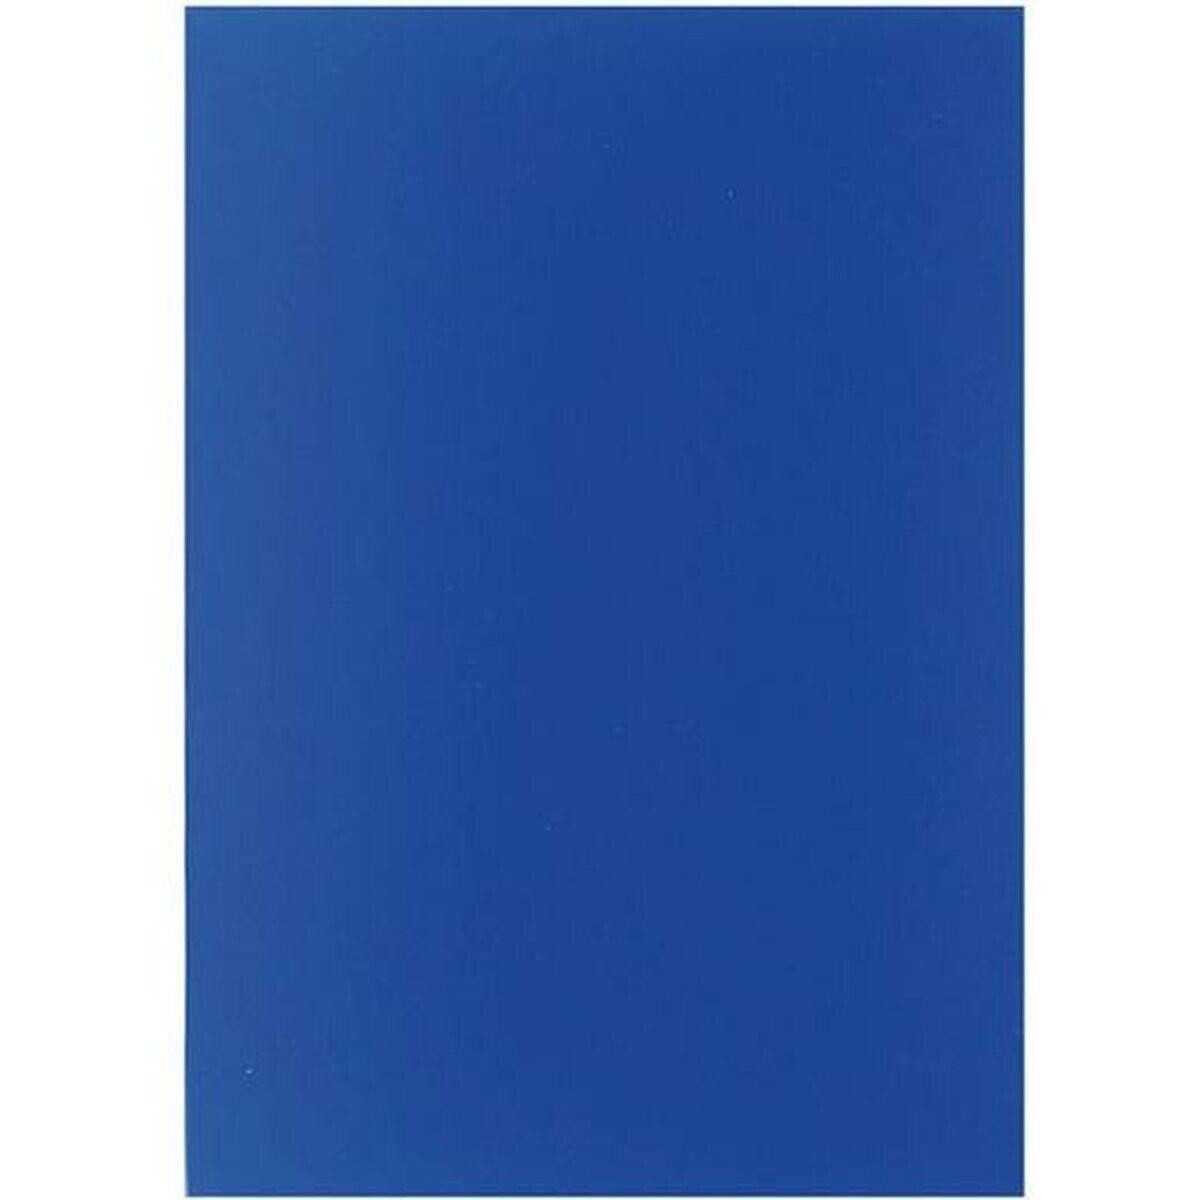 Binding covers Displast Blue A4 polypropylene 50 Pieces